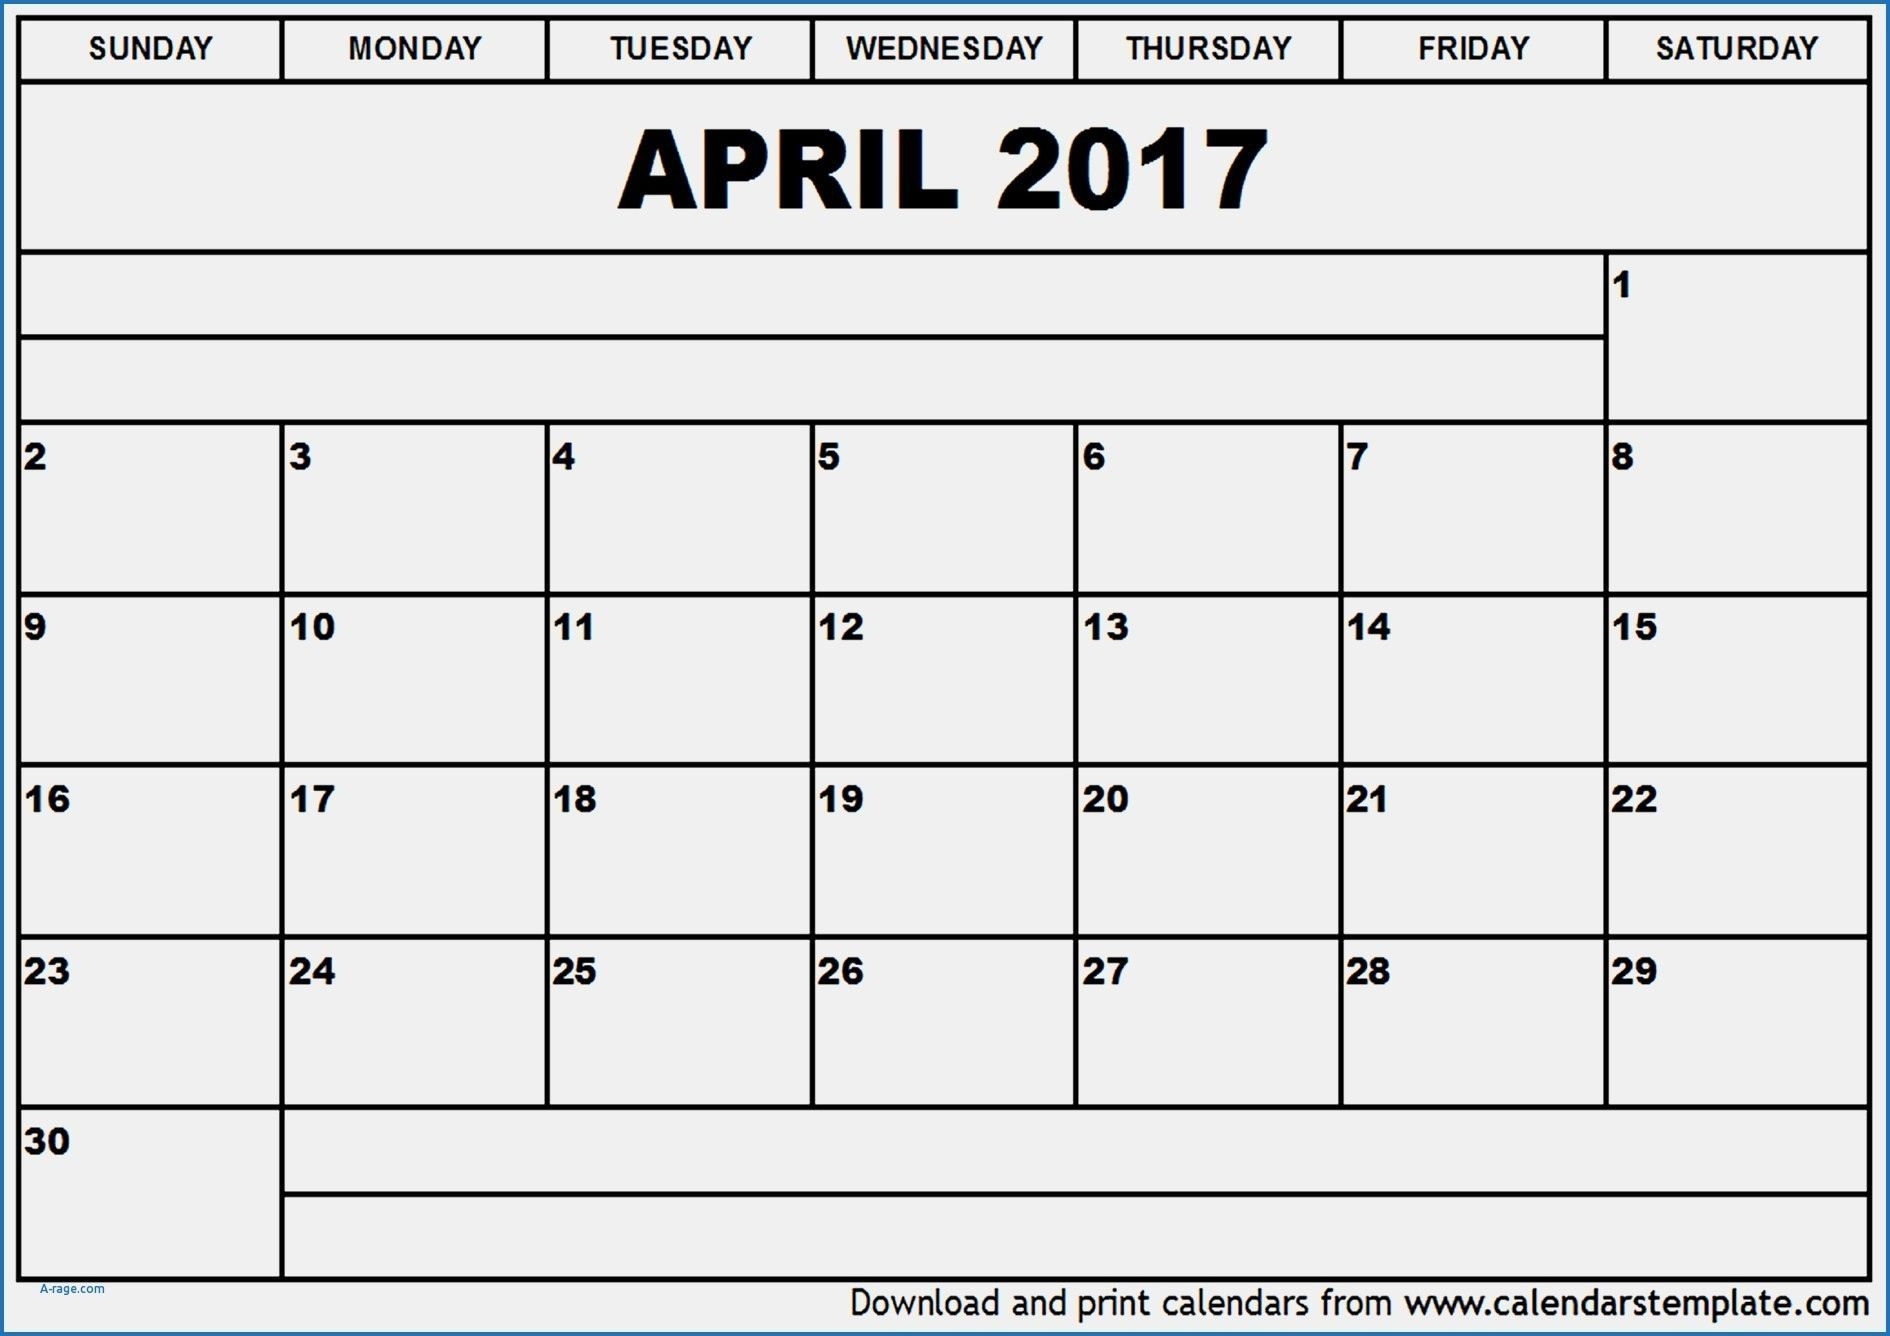 Calendar Templatevertex In 2020 | Calendar Template